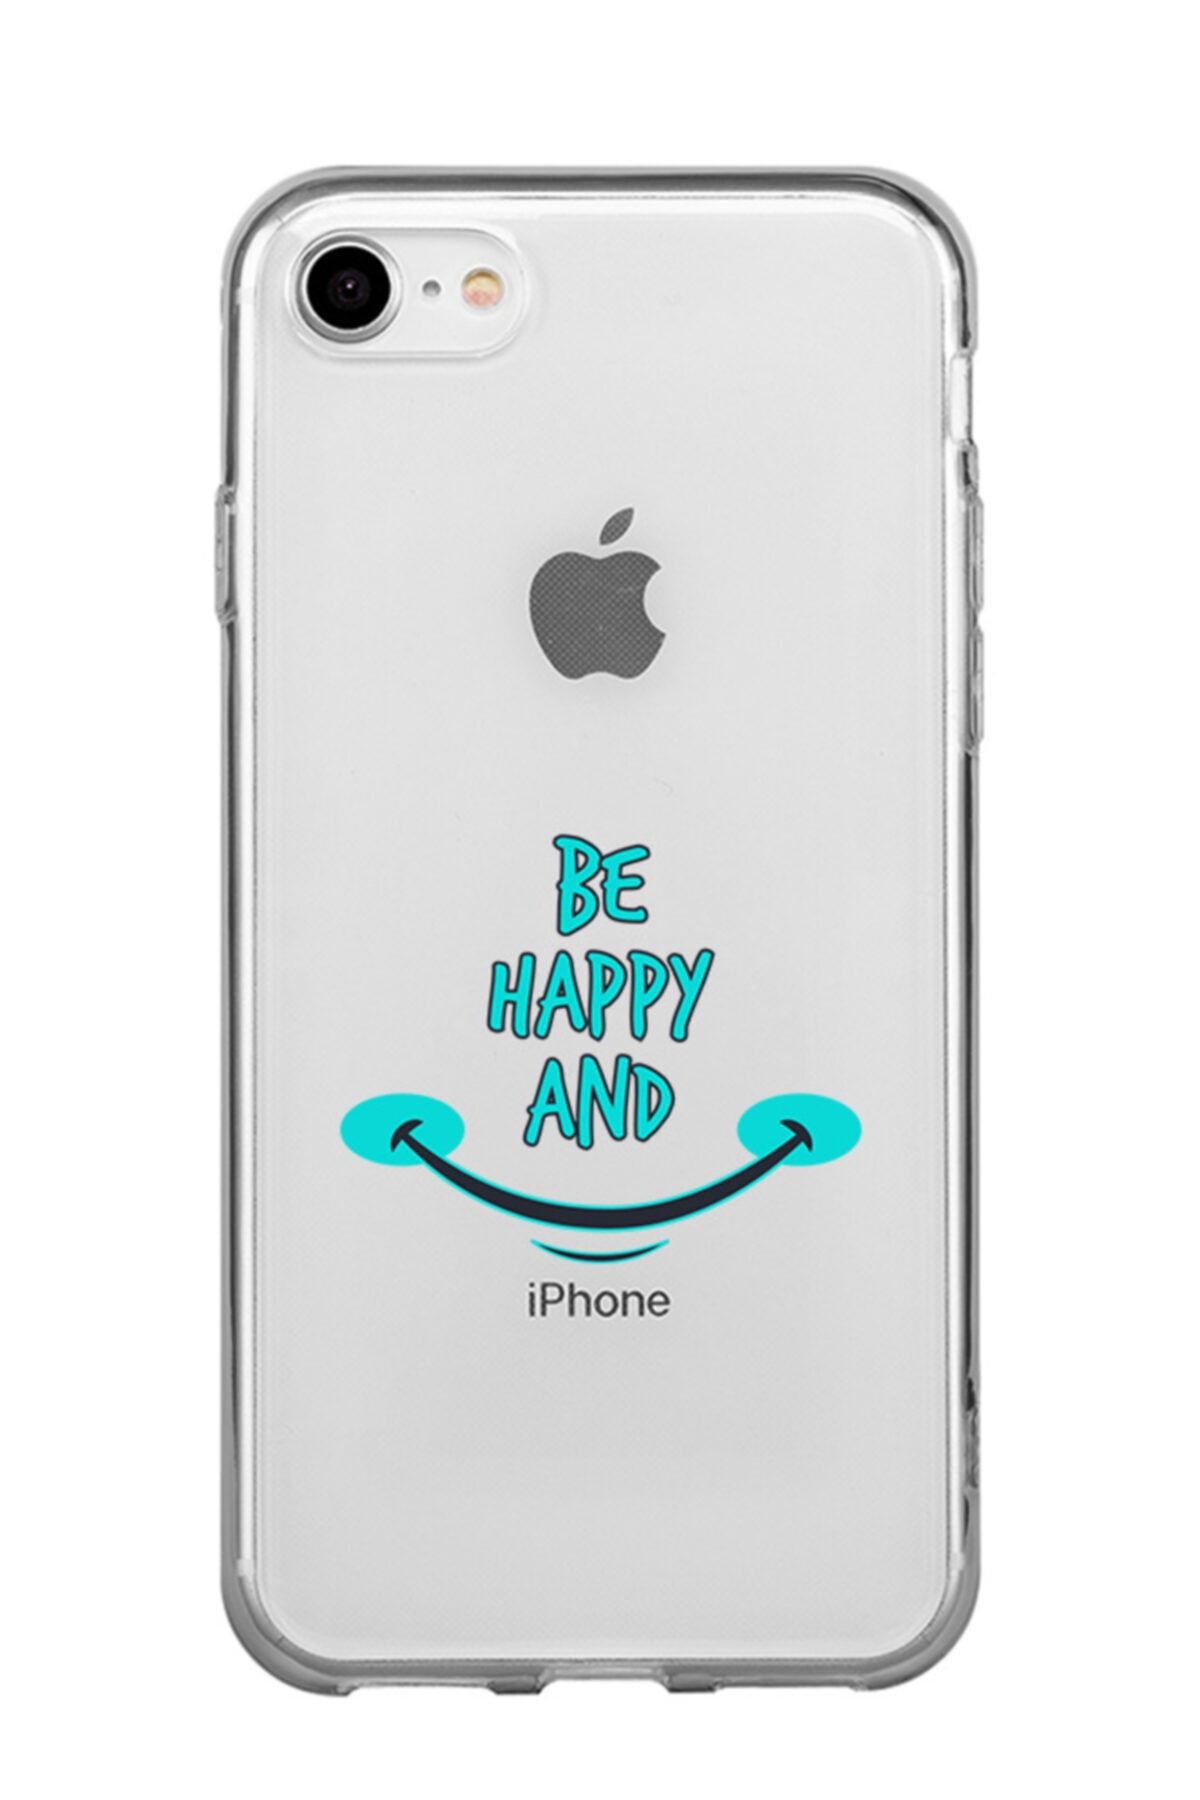 Dafhi Aksesuar Dafhi Apple Iphone 7 Be Happy And Telefon Kılıfı